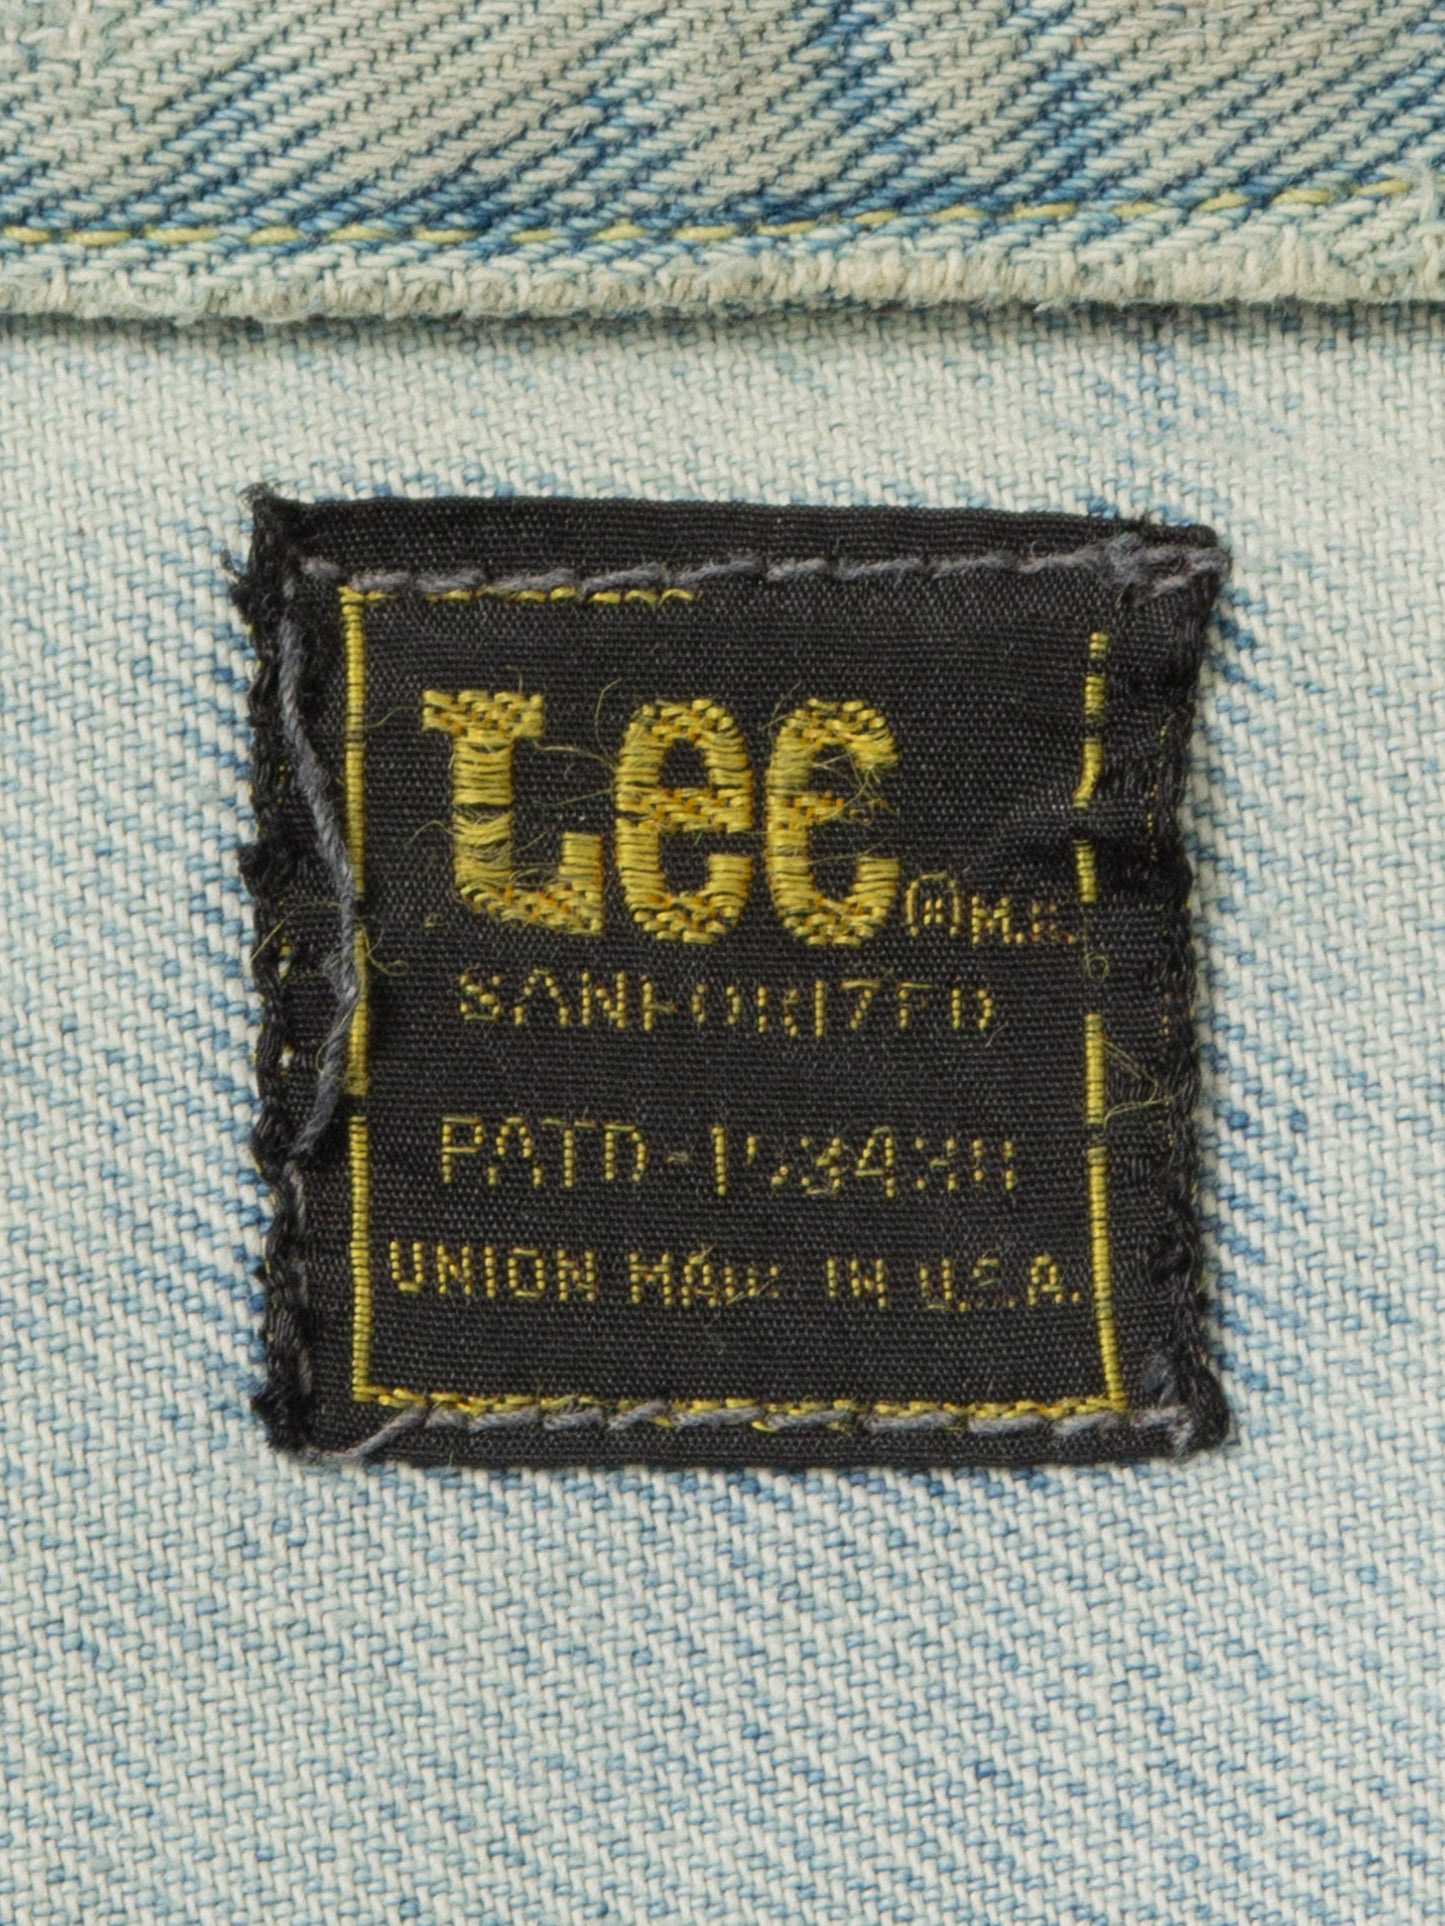 Vtg 1970s Patched Lee Cat-Eye Denim Jacket - Made in USA (M)